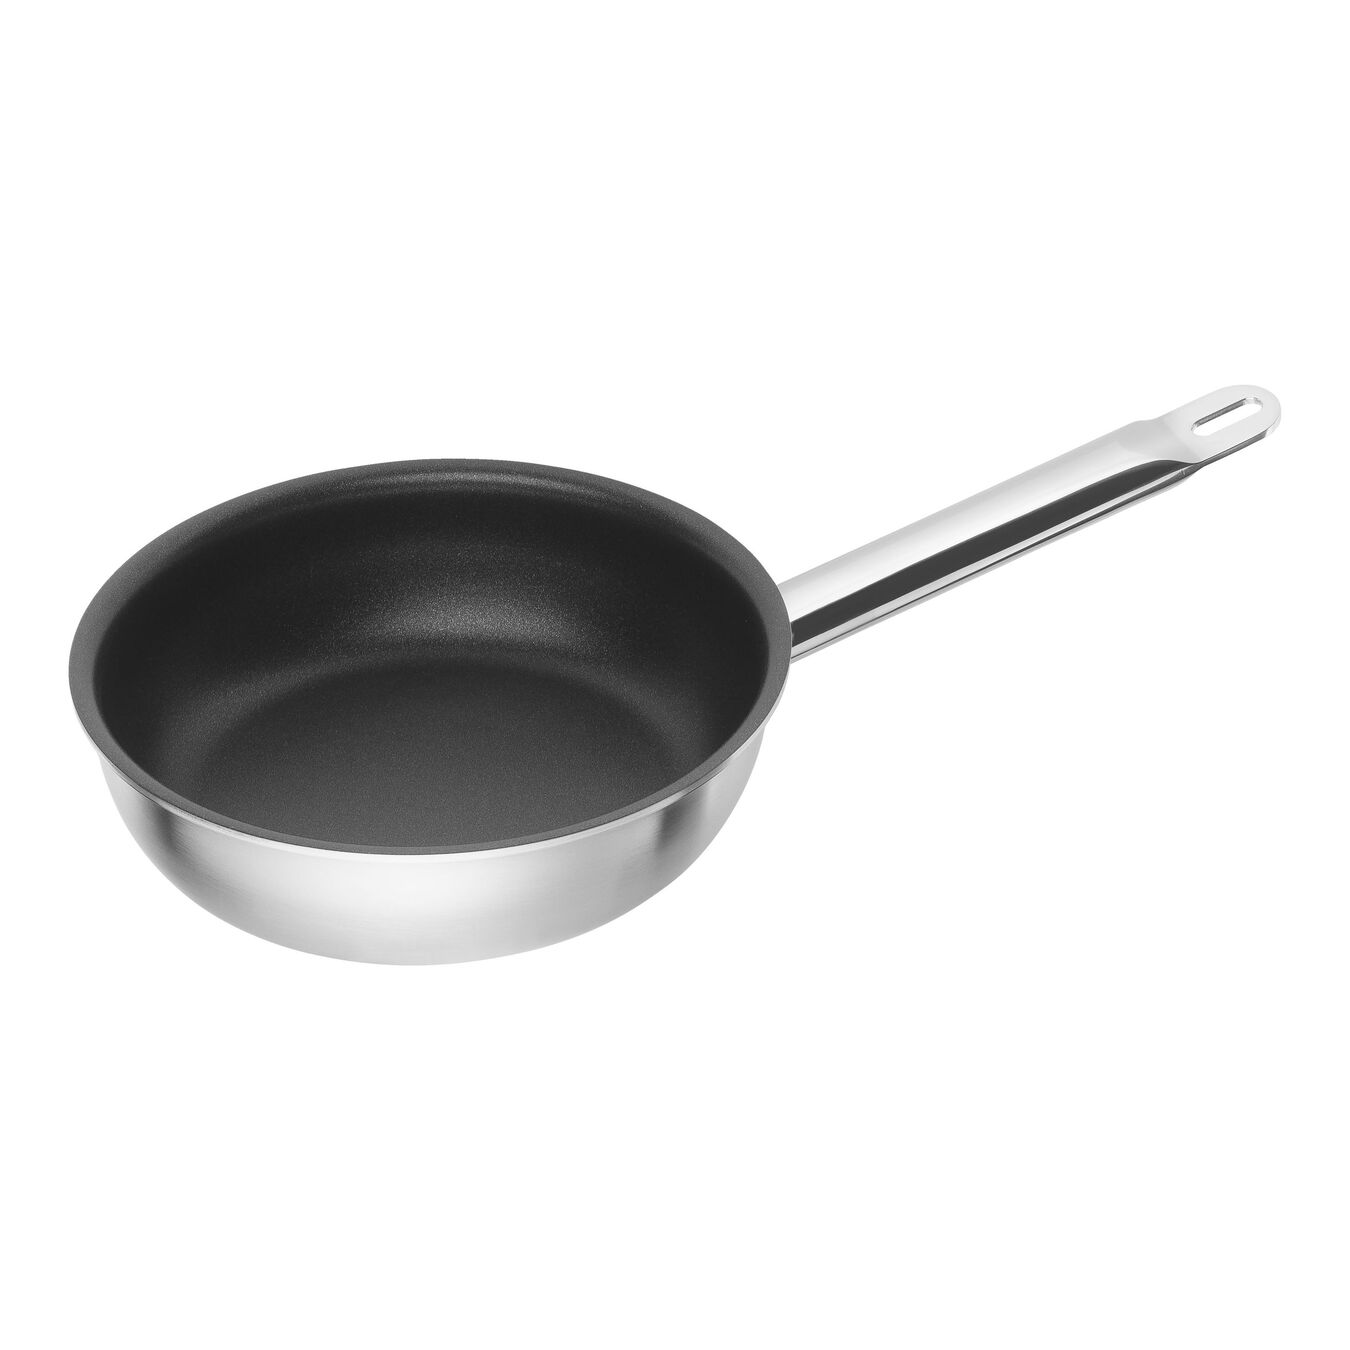 20 cm 18/10 Stainless Steel Frying pan silver-black,,large 1